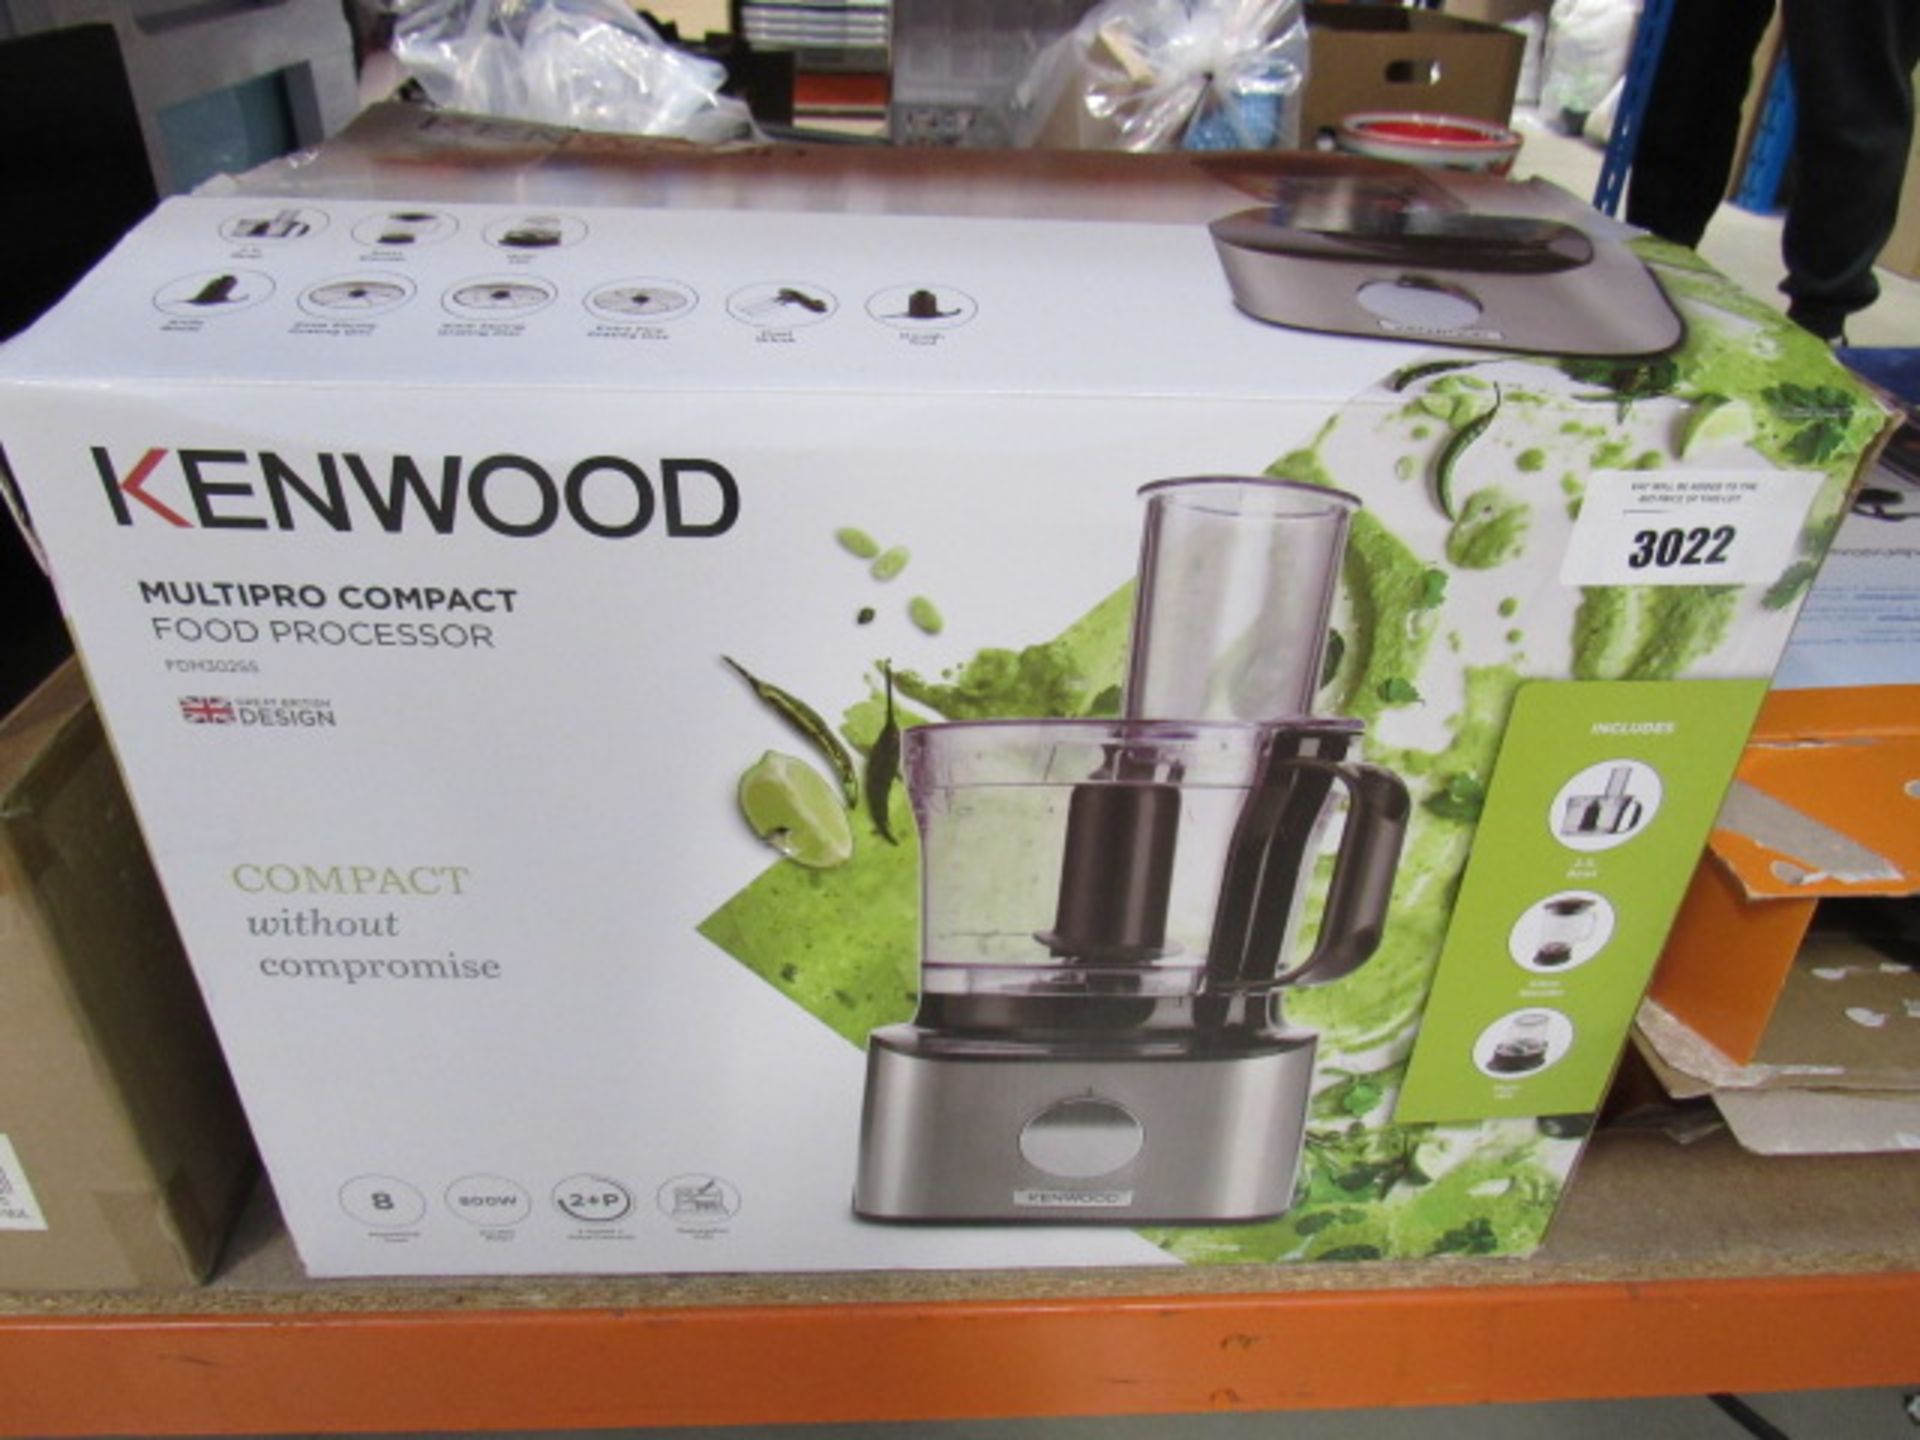 Boxed Kenwood Multi Pro compact food processor